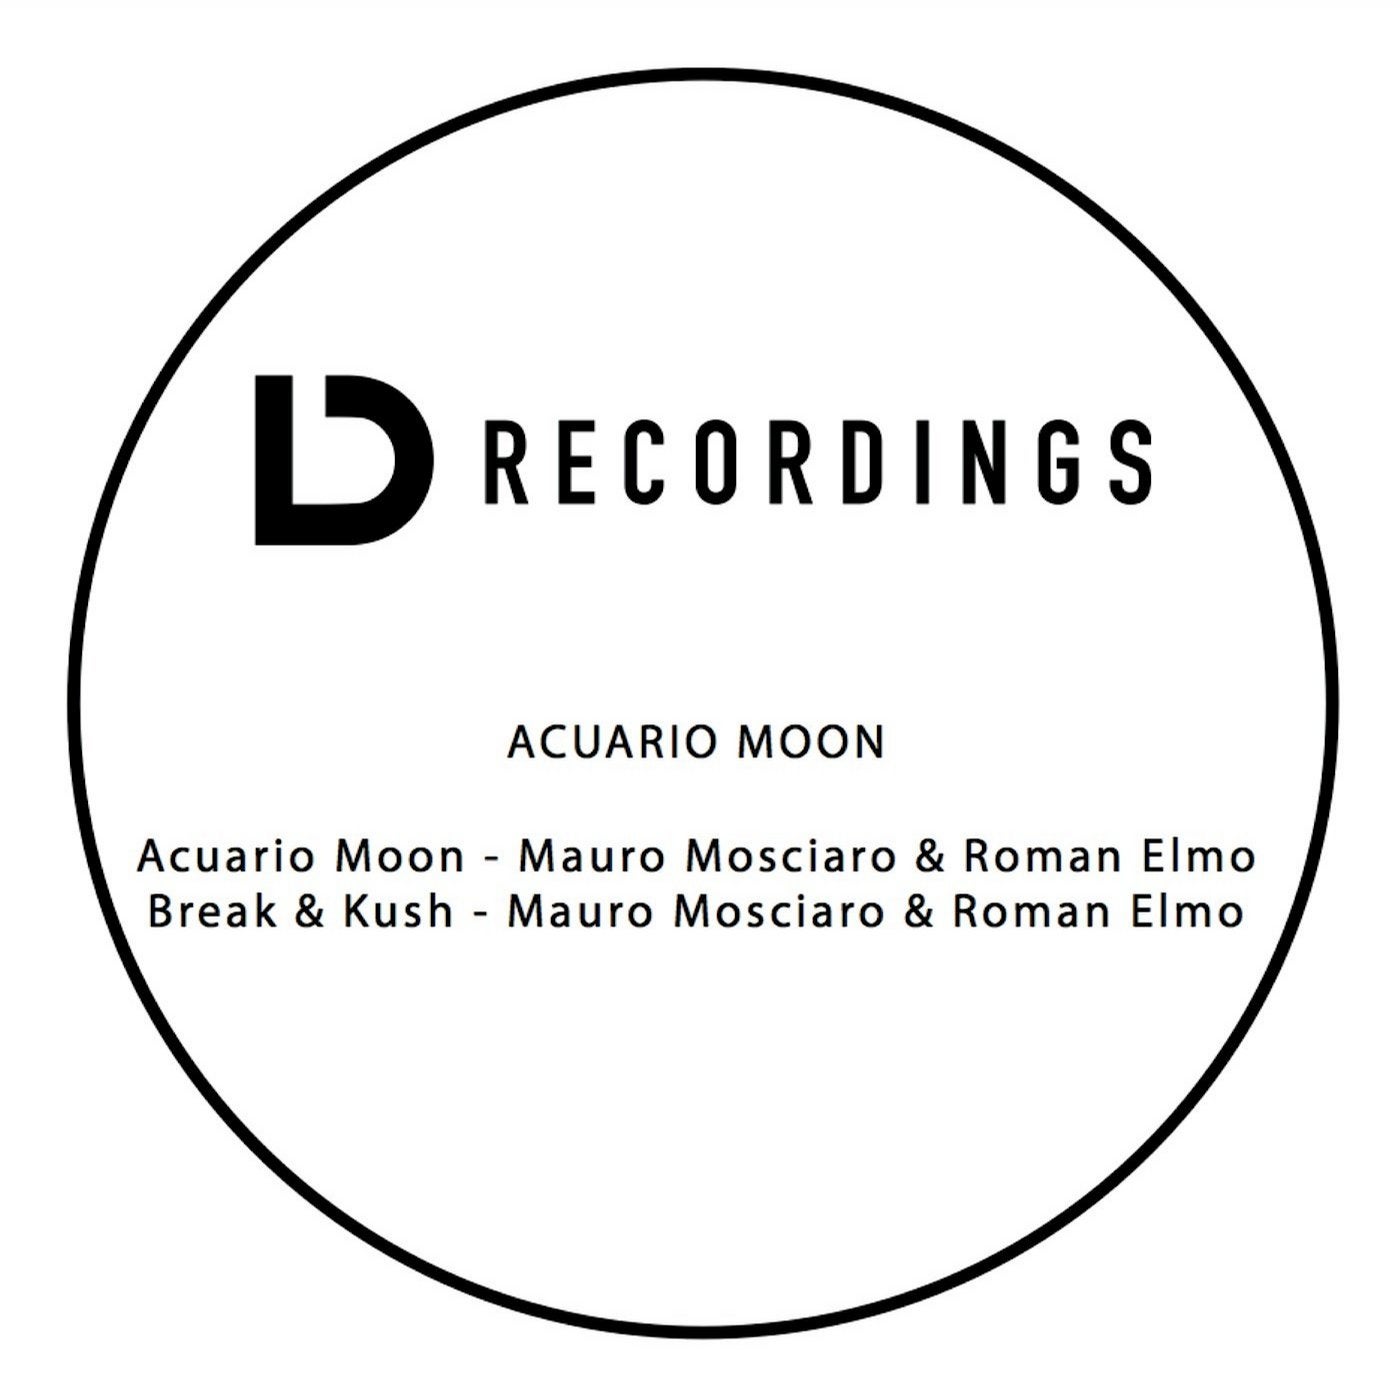 Acuario Moon - Mauro Mosciaro & Roman Elmo